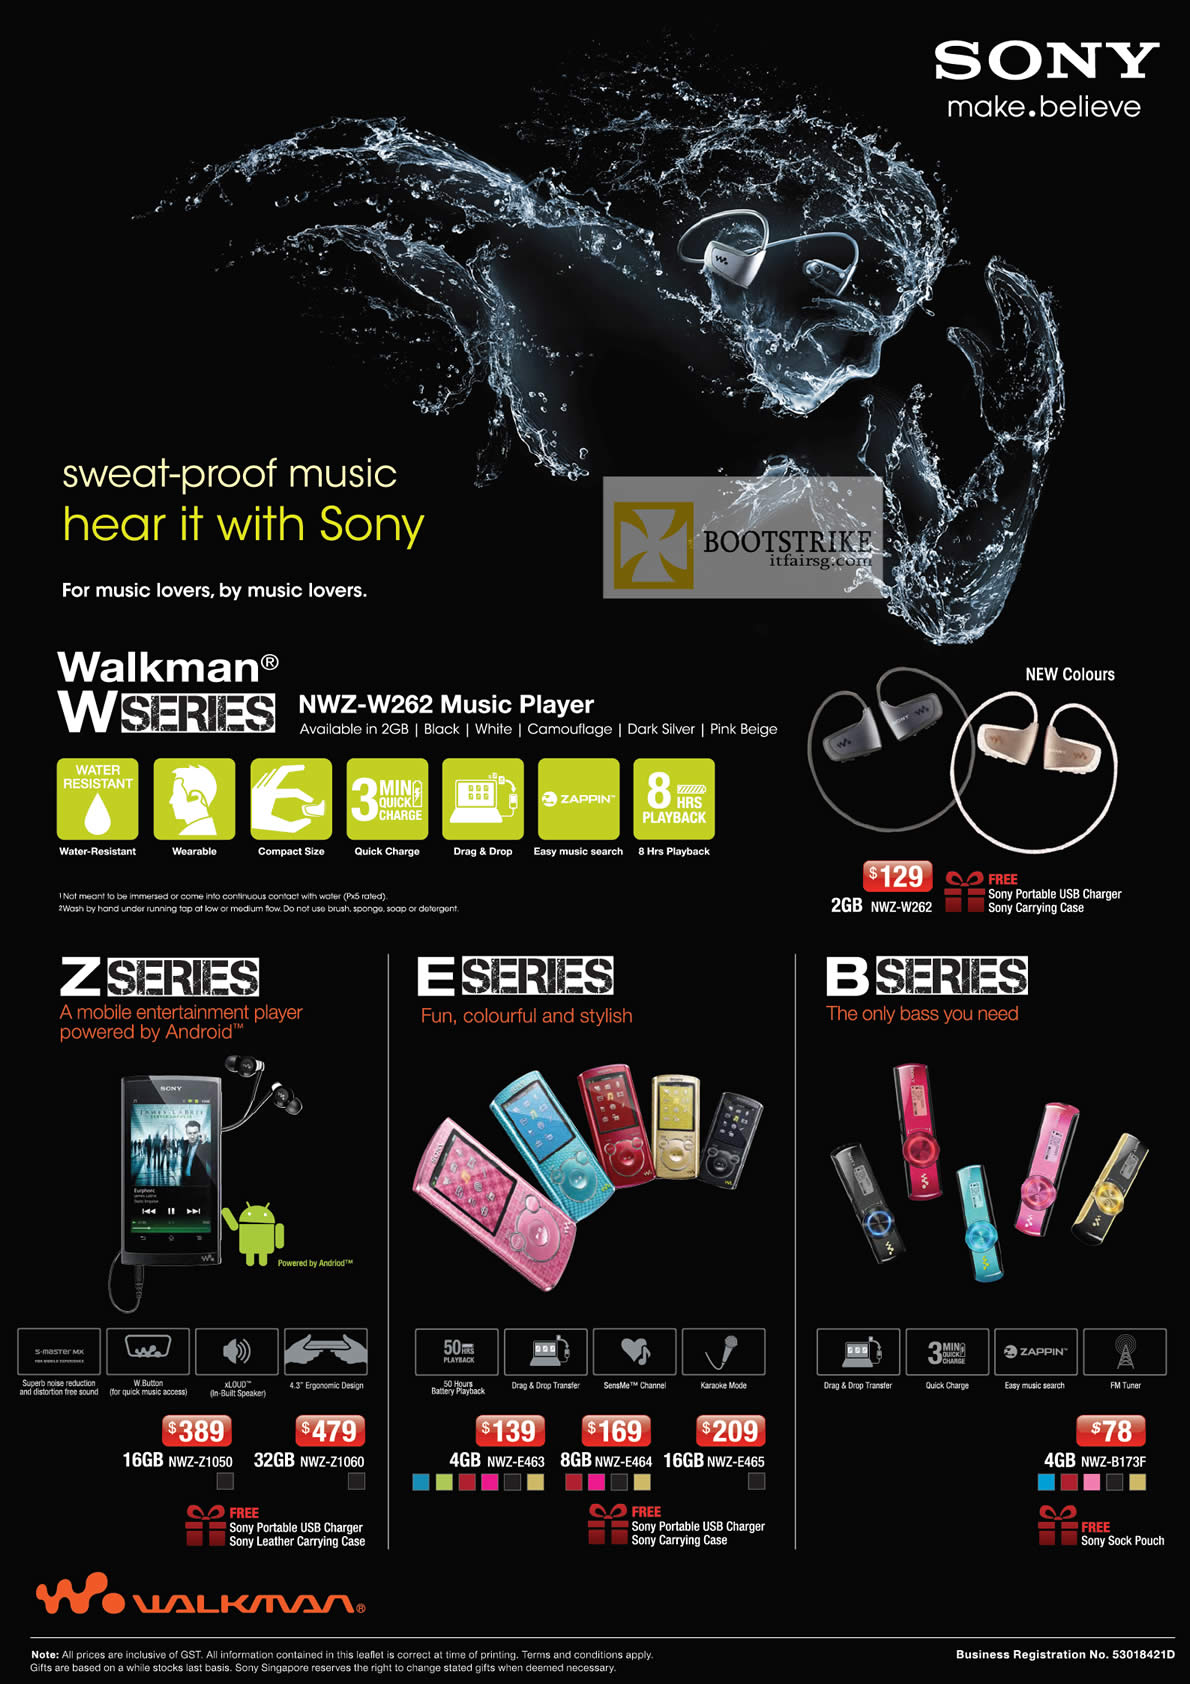 COMEX 2012 price list image brochure of Sony Walkman W Series NWZ-W262, Z Series NWZ-Z1050, NWZ-Z1060, E Series, NWZ-E463, NWZ-E464, NWZ-E465, B Series NWZ-B173F